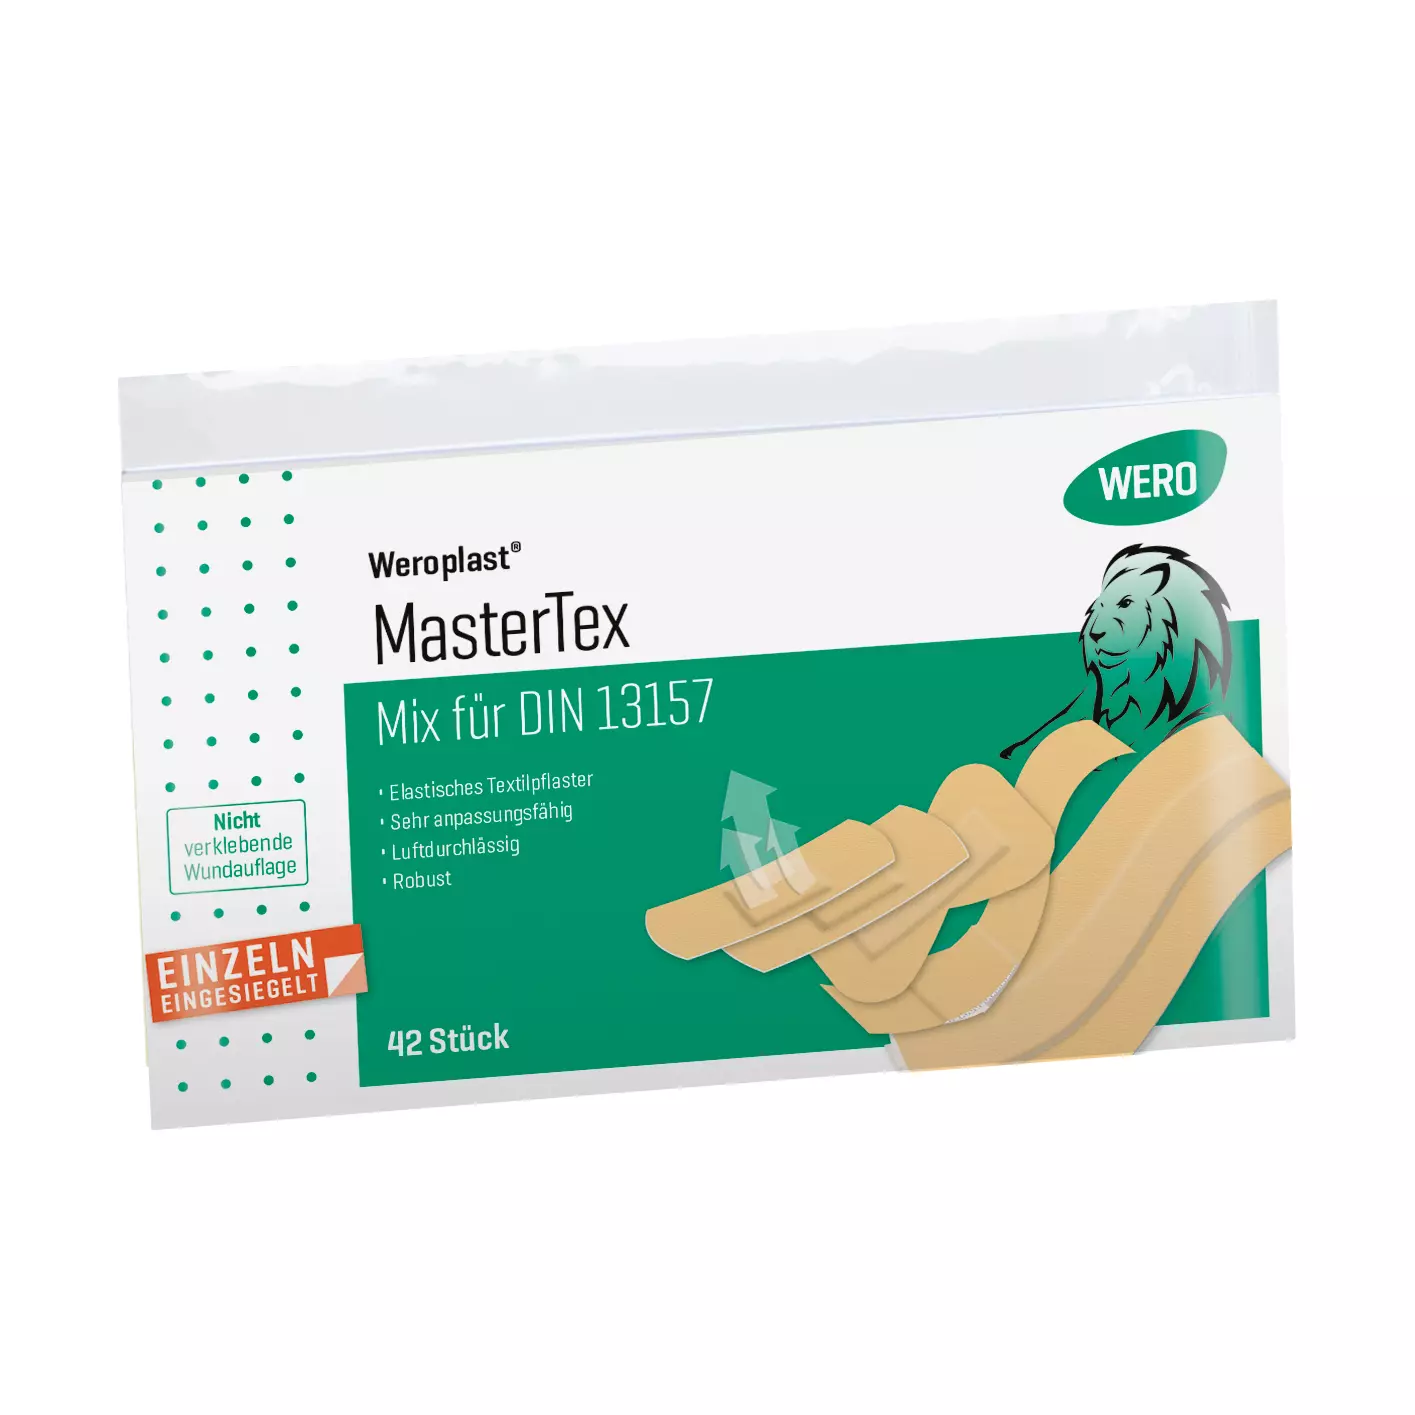 Weroplast MasterTex Mix for DIN 13157 in a foil bag